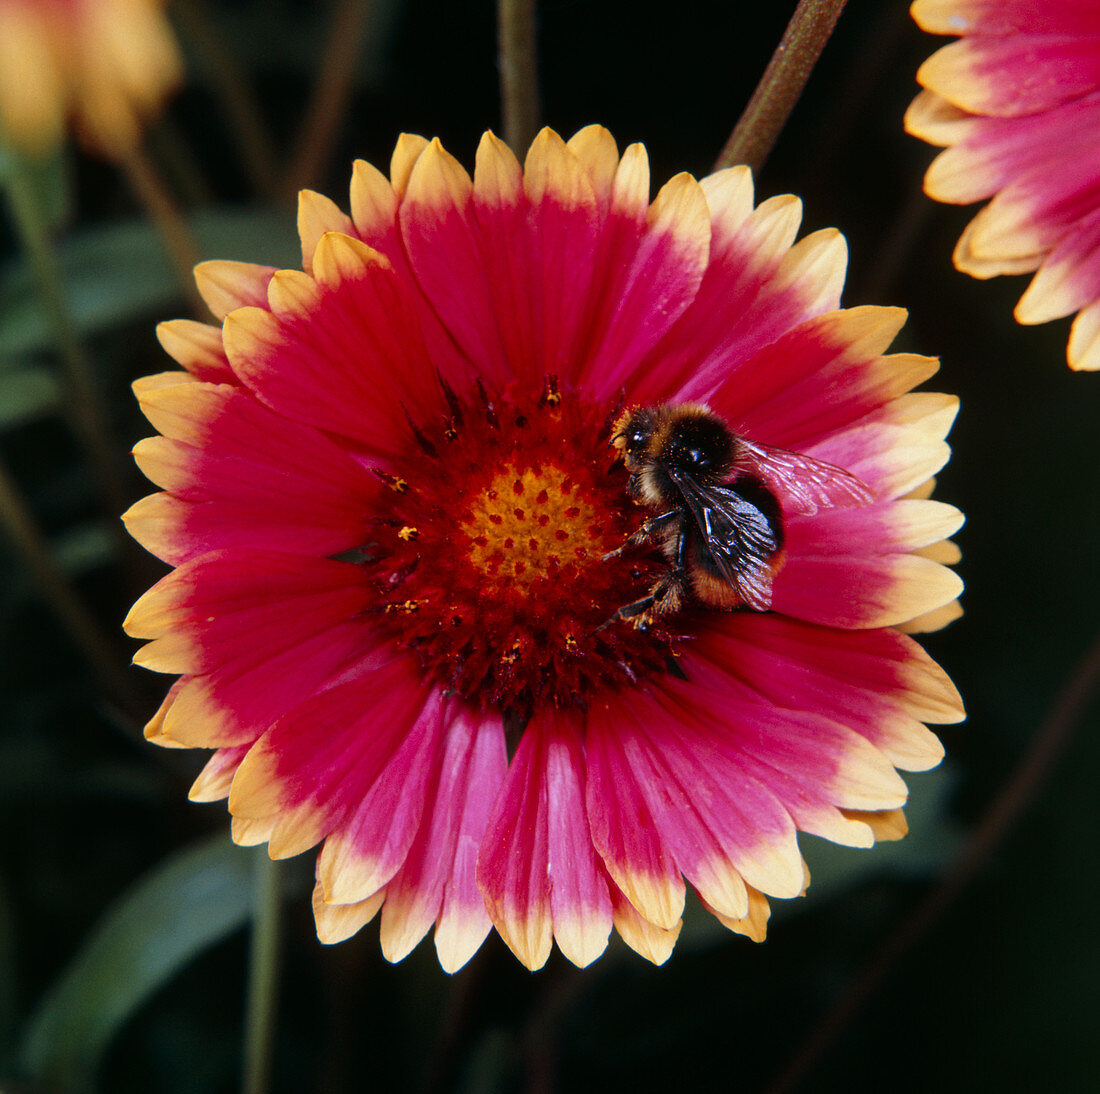 Bee pollinating Gaillardia flower